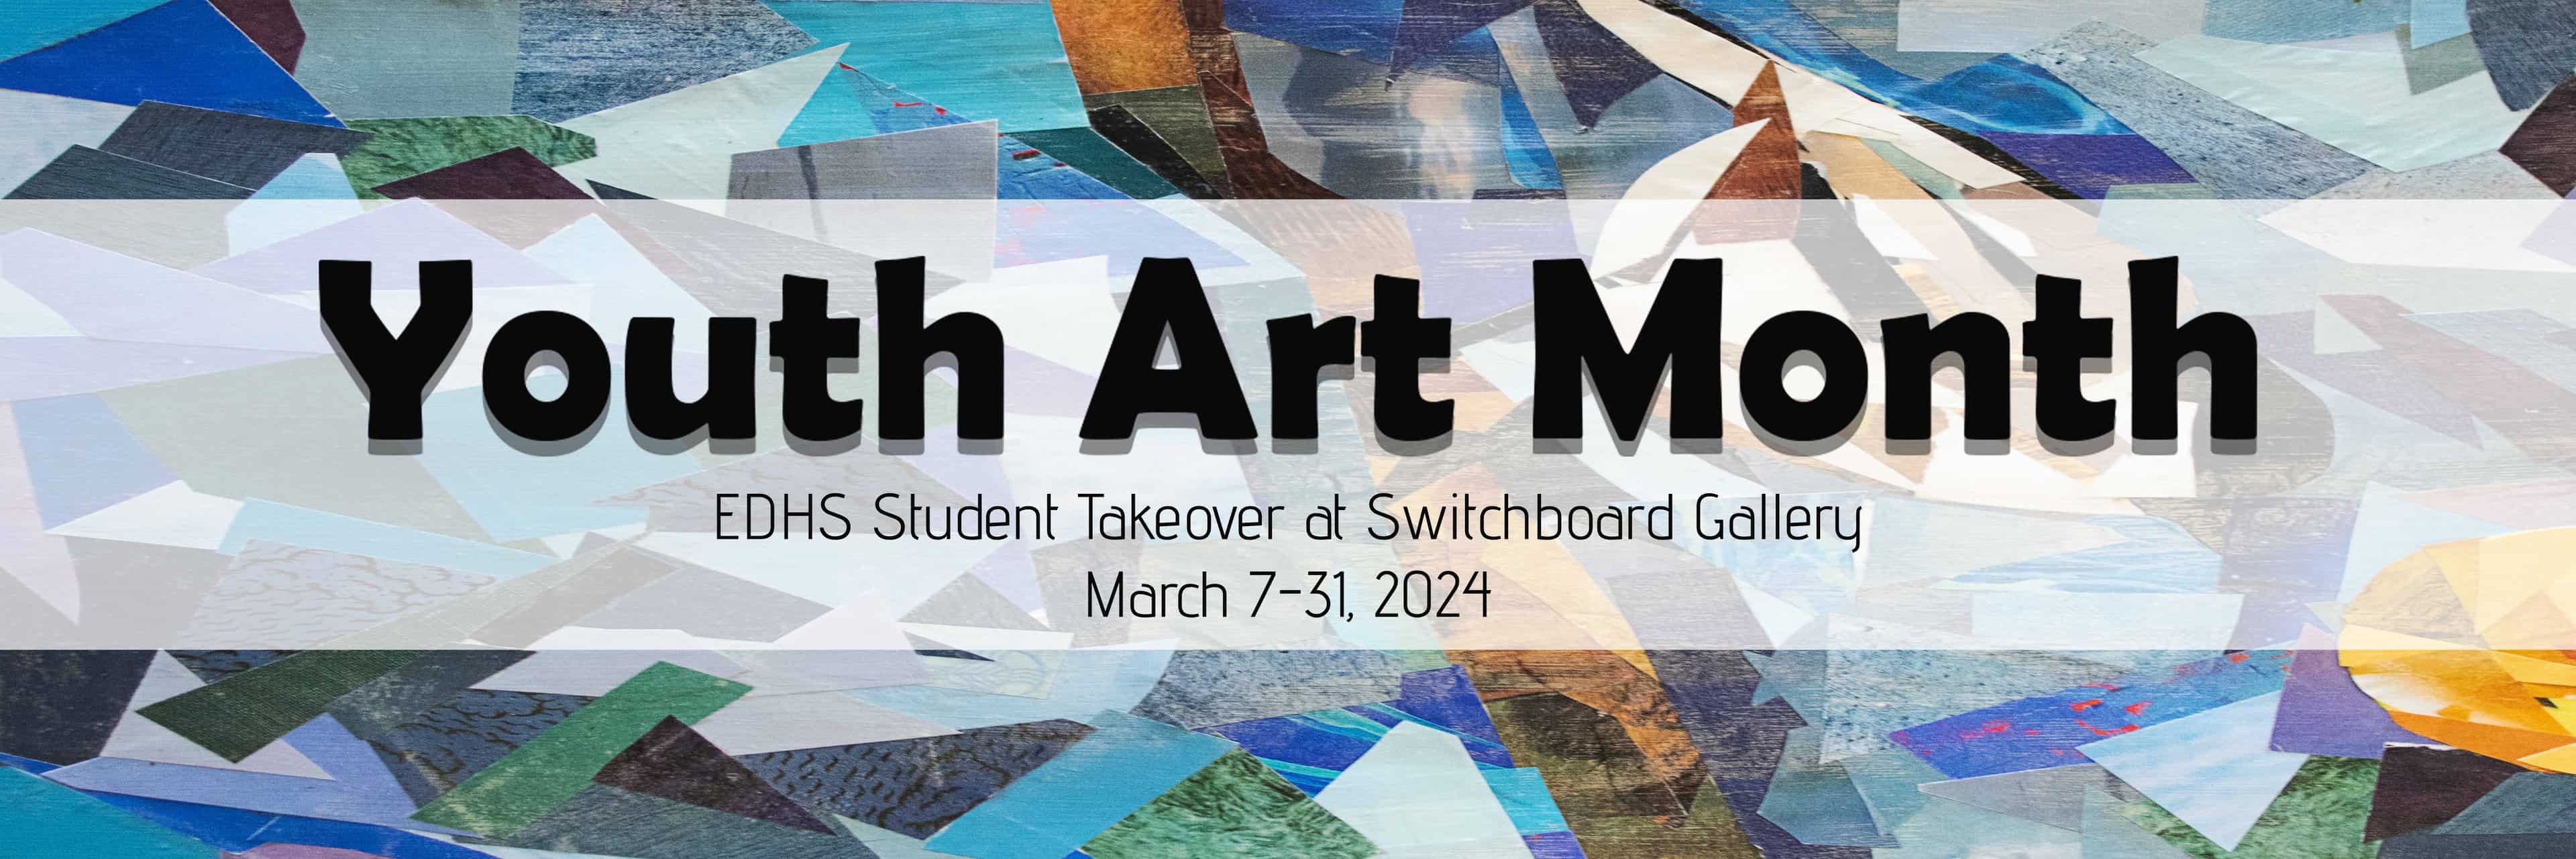 Youth Art Month Banner_website.jpb